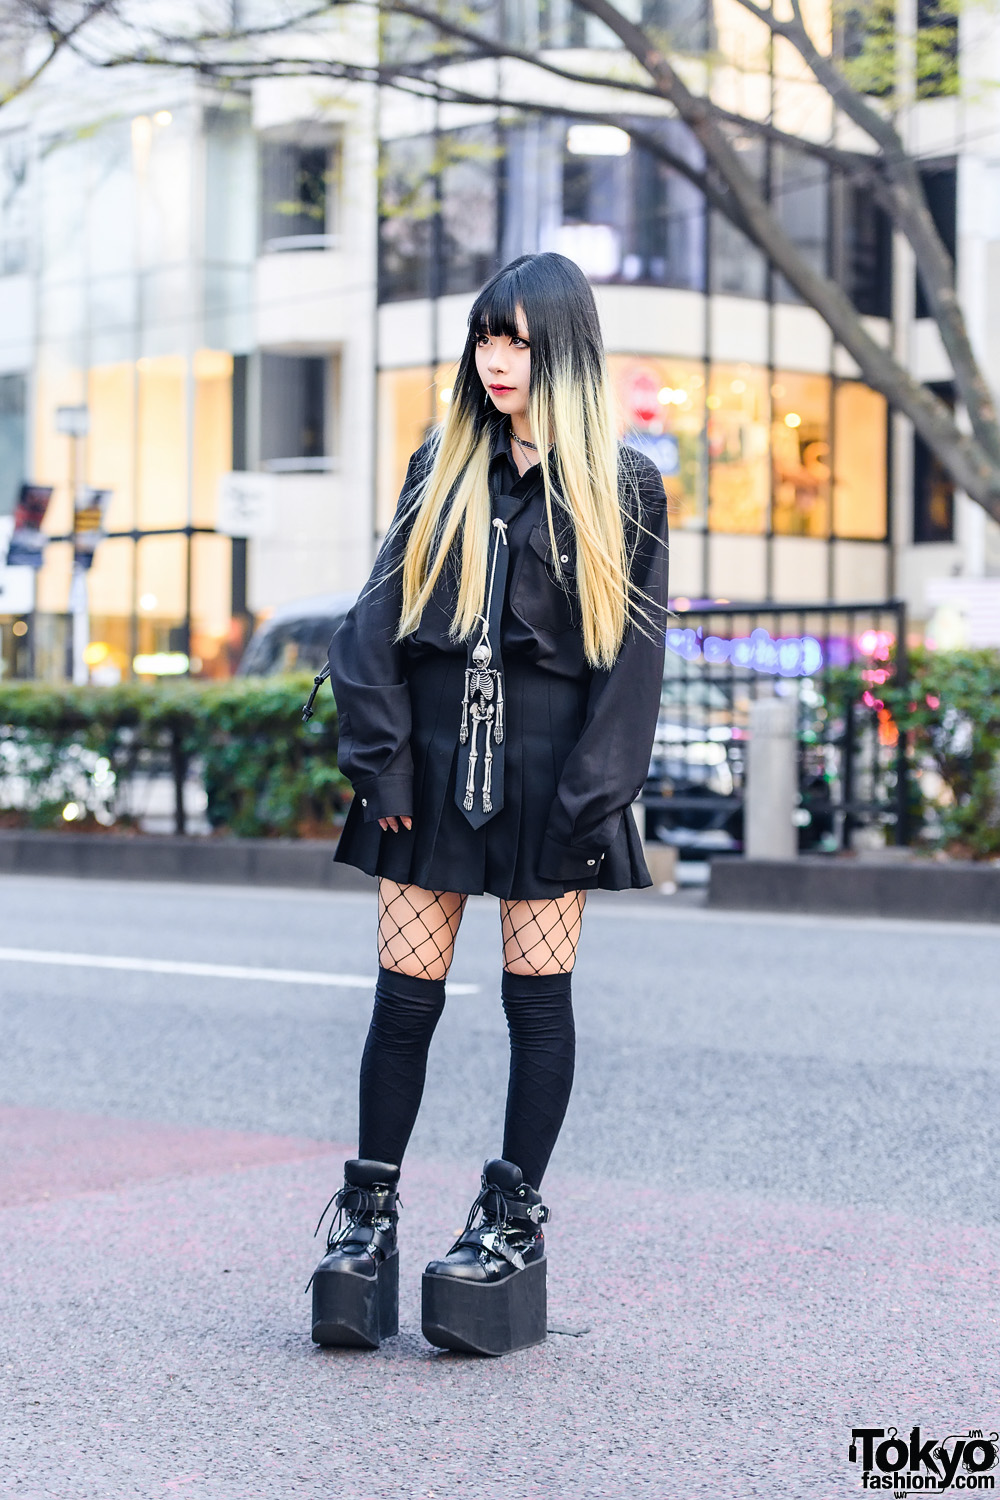 All Black Tokyo Streetwear w/ Two-Tone Hair, Noble Noire Tokyo Accessories, Skeleton Necktie, Pleated Skirt, Fishnets, Killstar Bag & Platform Boots